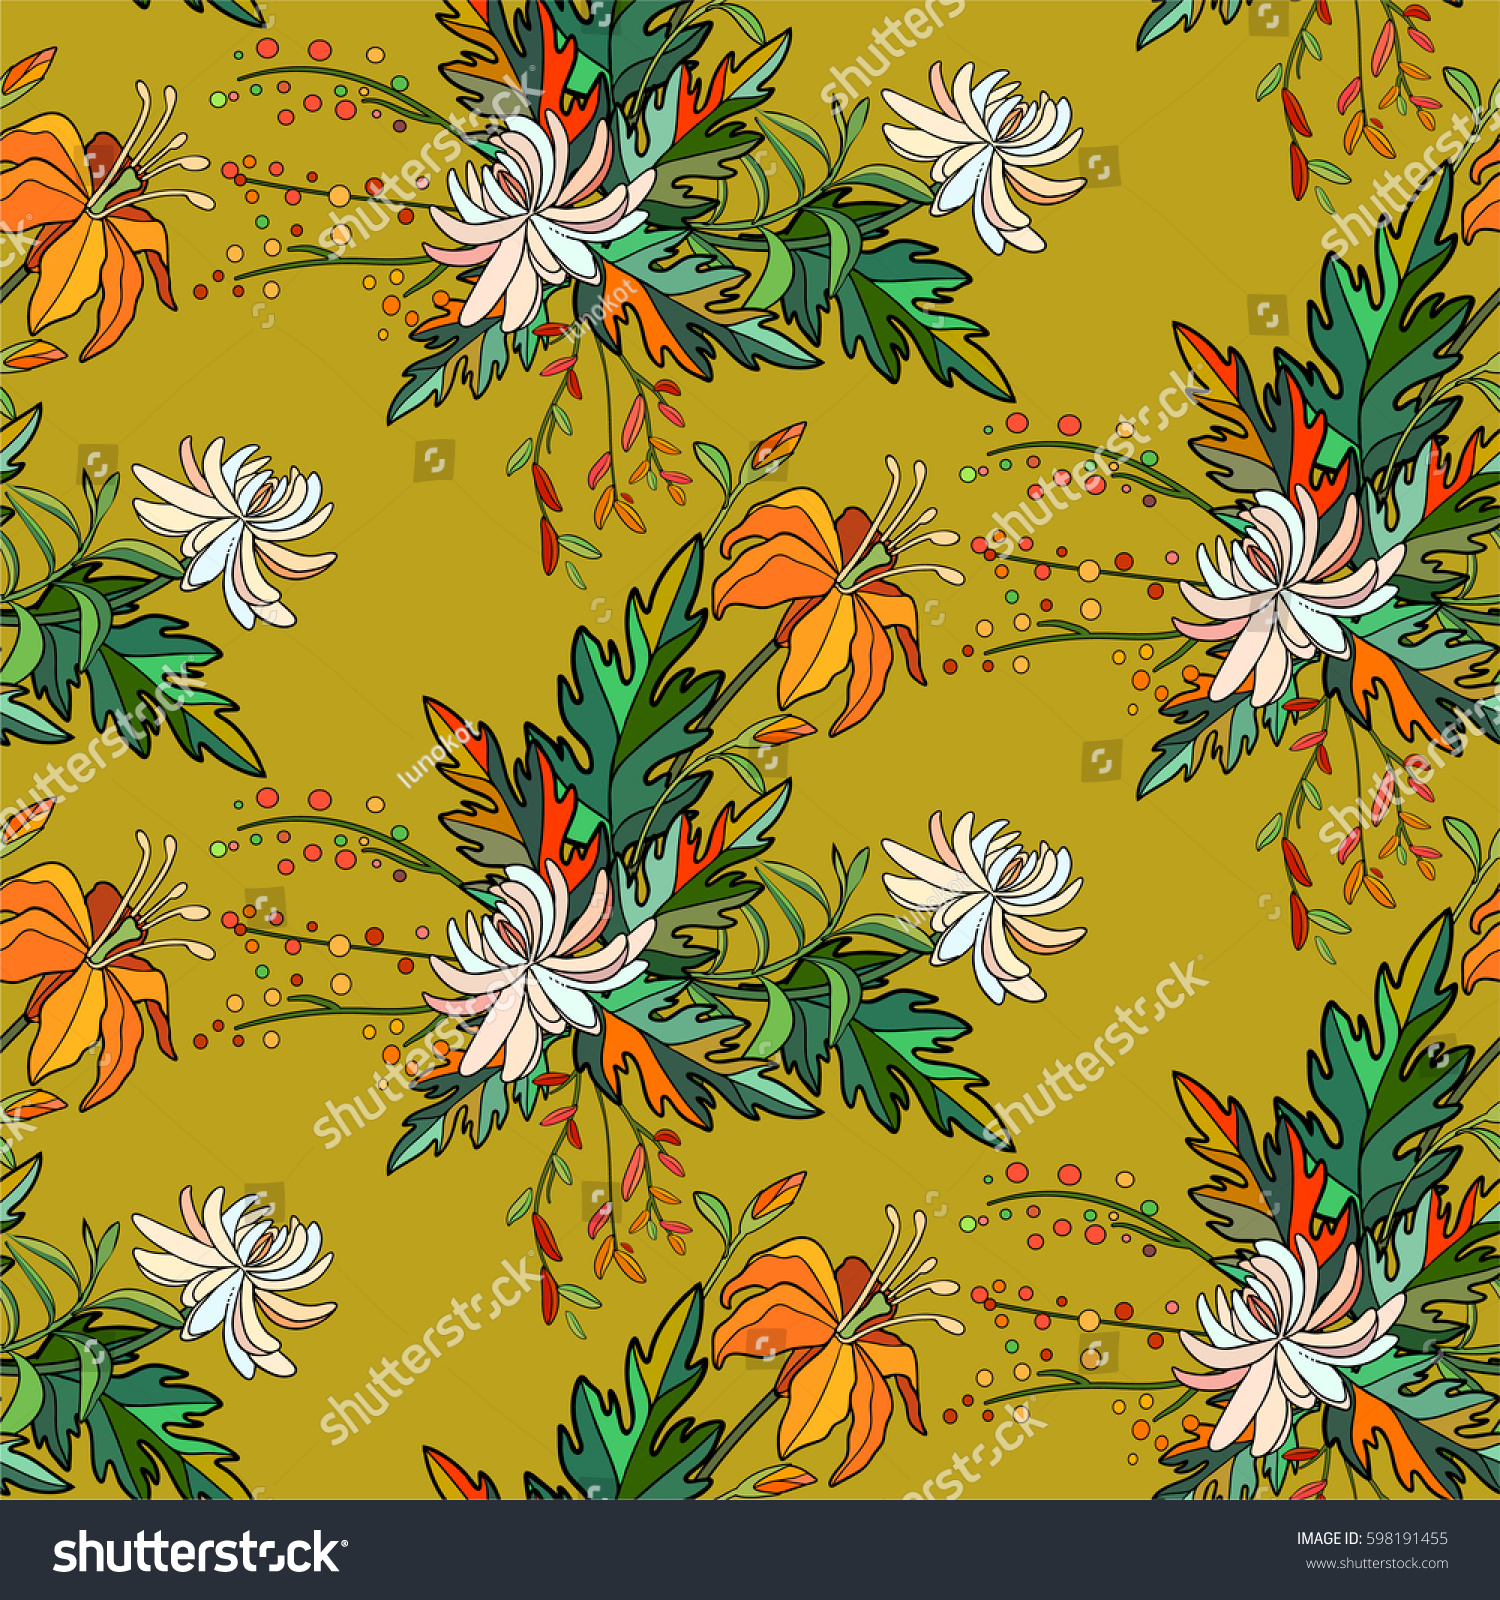 Download Edit Vectors Free Online - Floral background ...